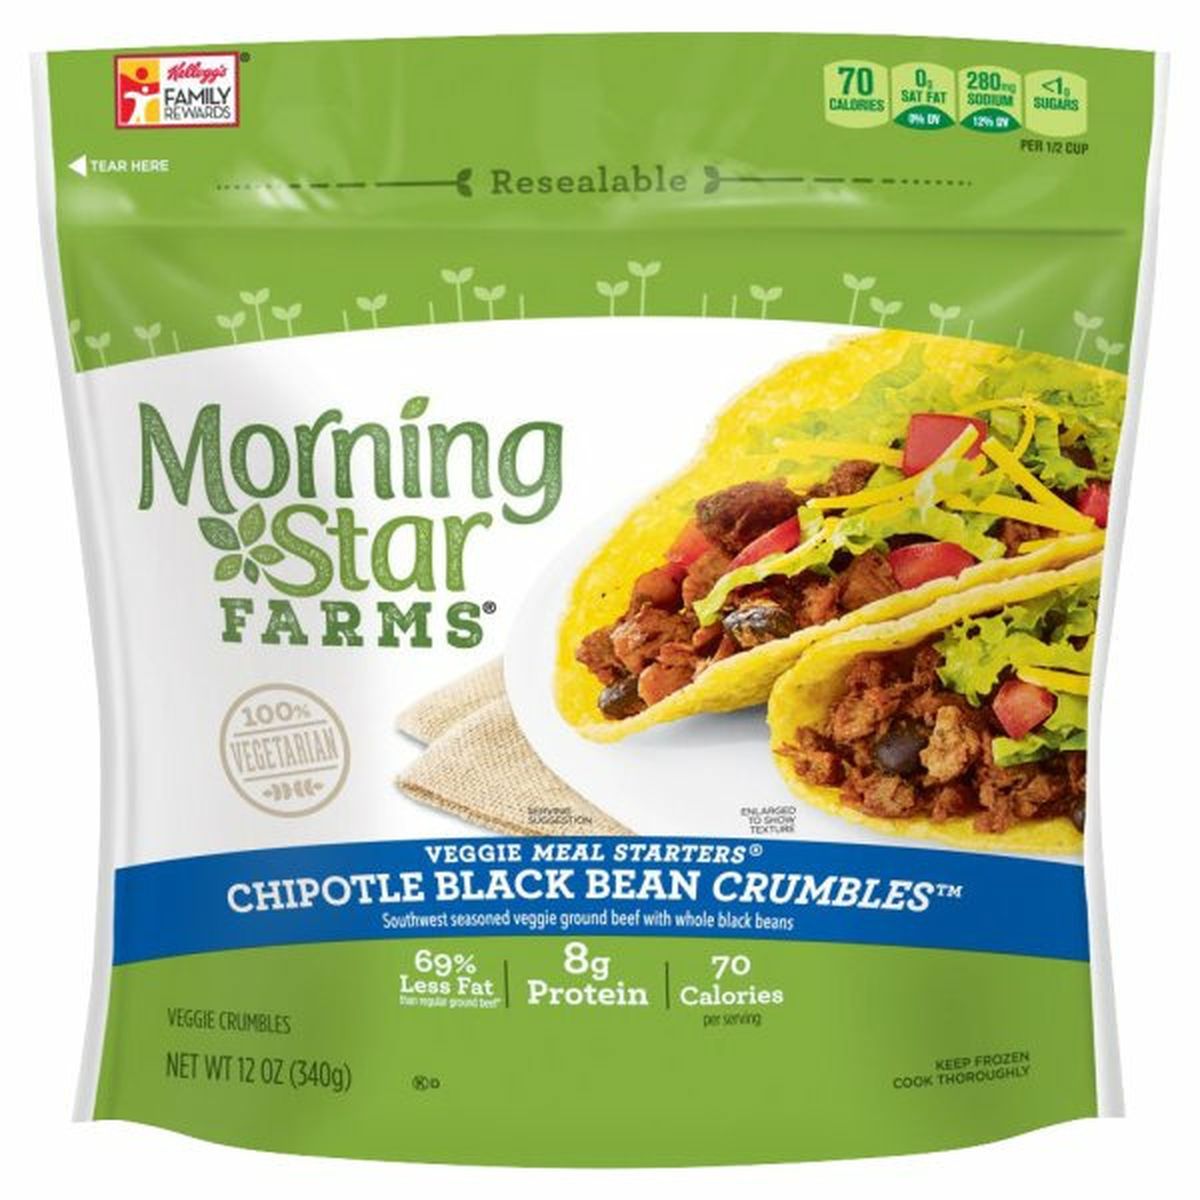 Calories in Morning Star Farms Veggie Morningstar Farms, Veggie Meal Starters, Chipotle Black Bean Crumbles, Vegetarian